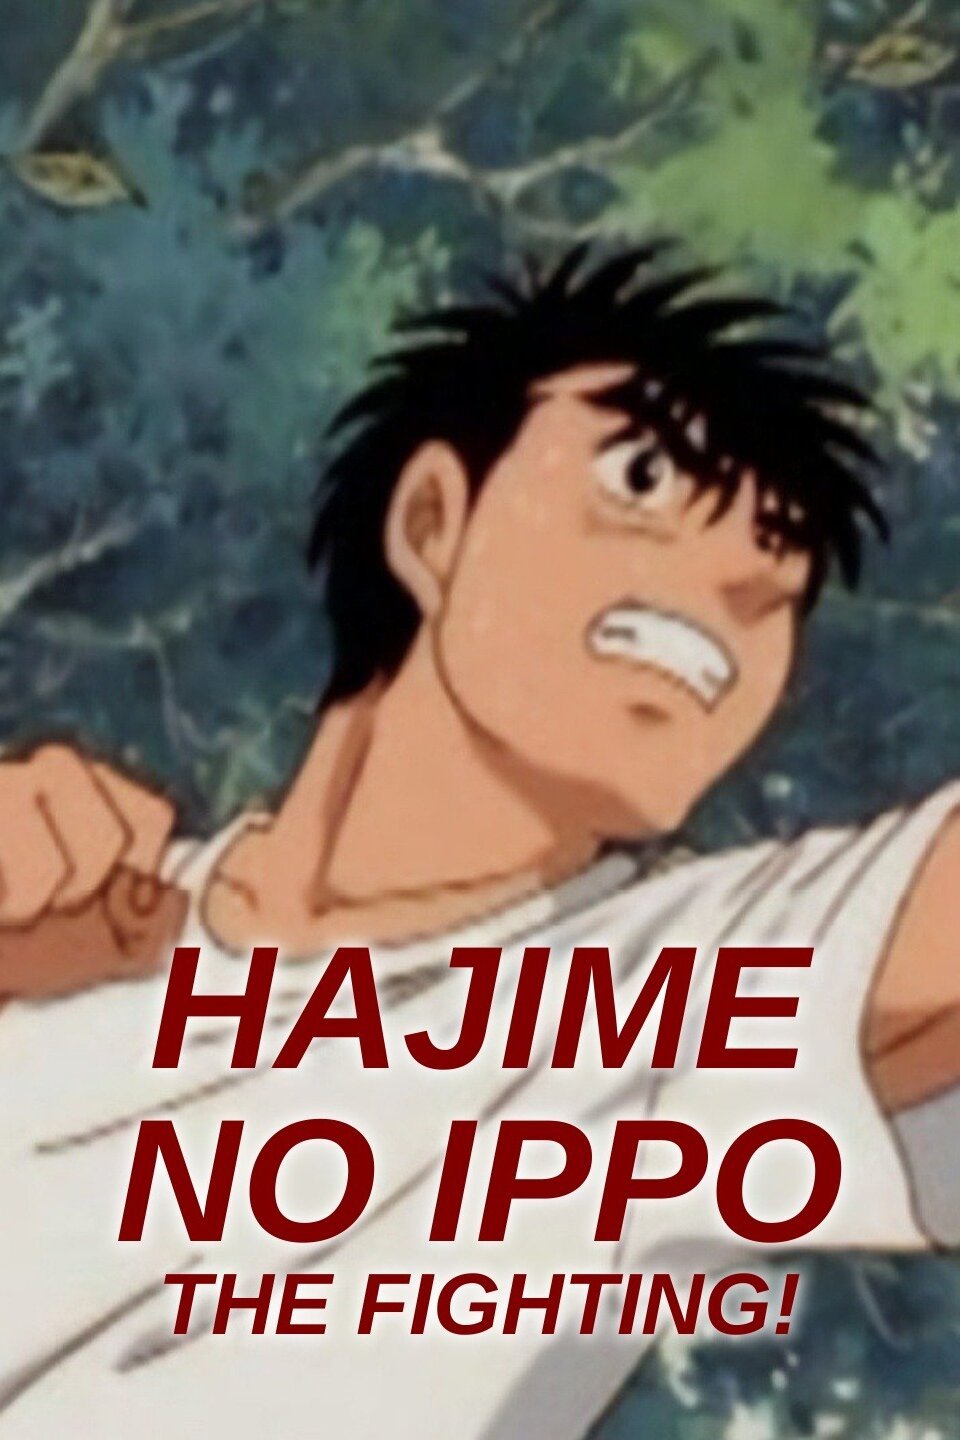 hajime no ippo season 3 episode 1 full english sub